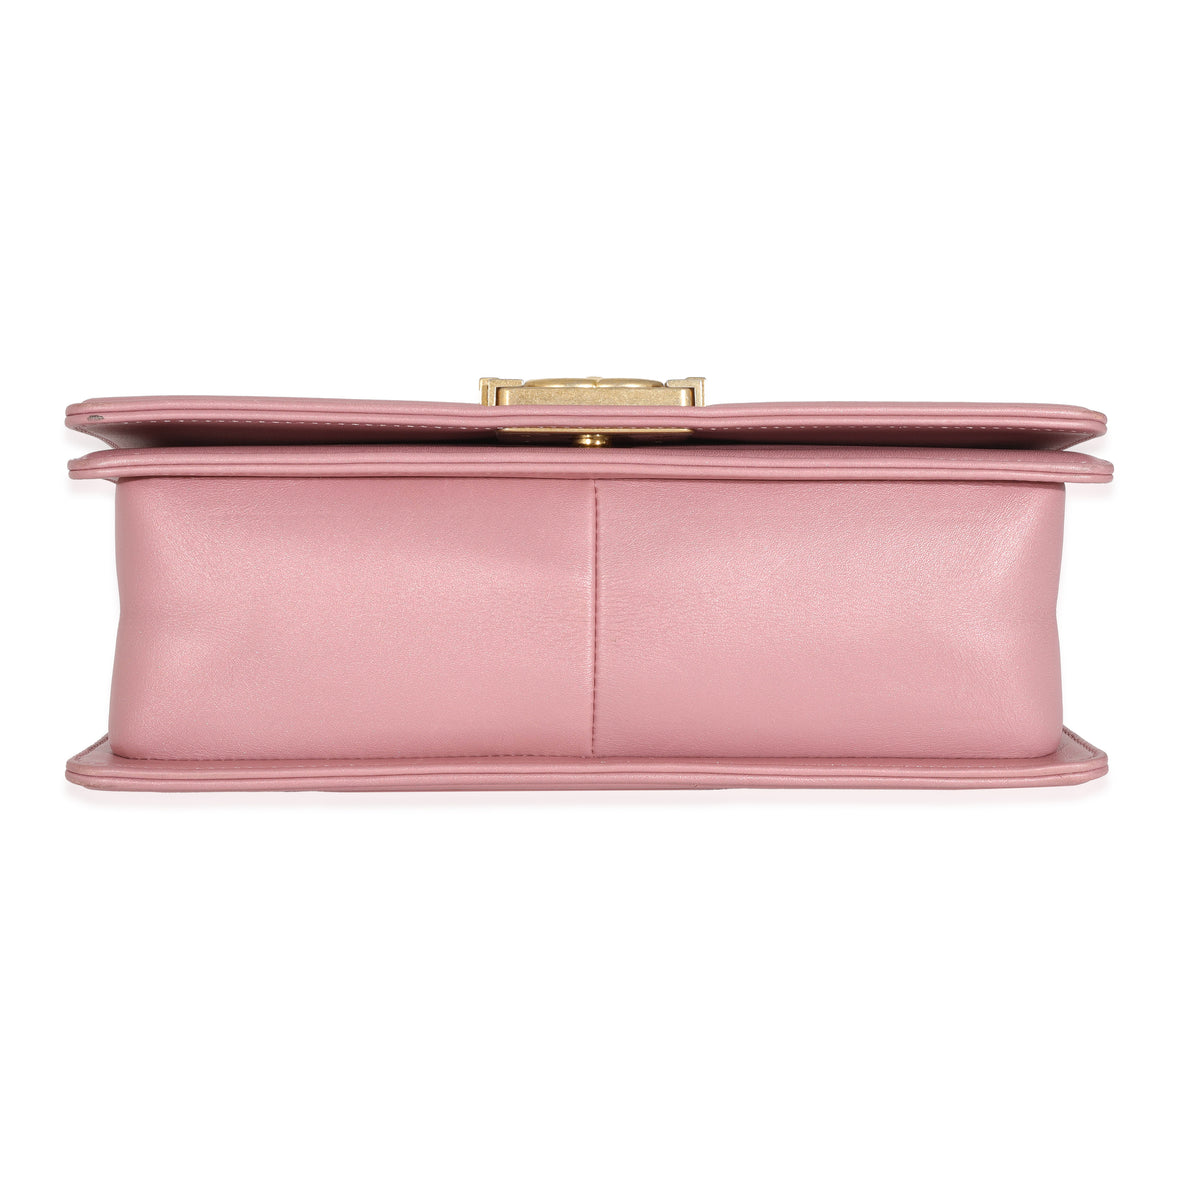 Chanel Metallic Pink Calfskin Medium Boy Bag